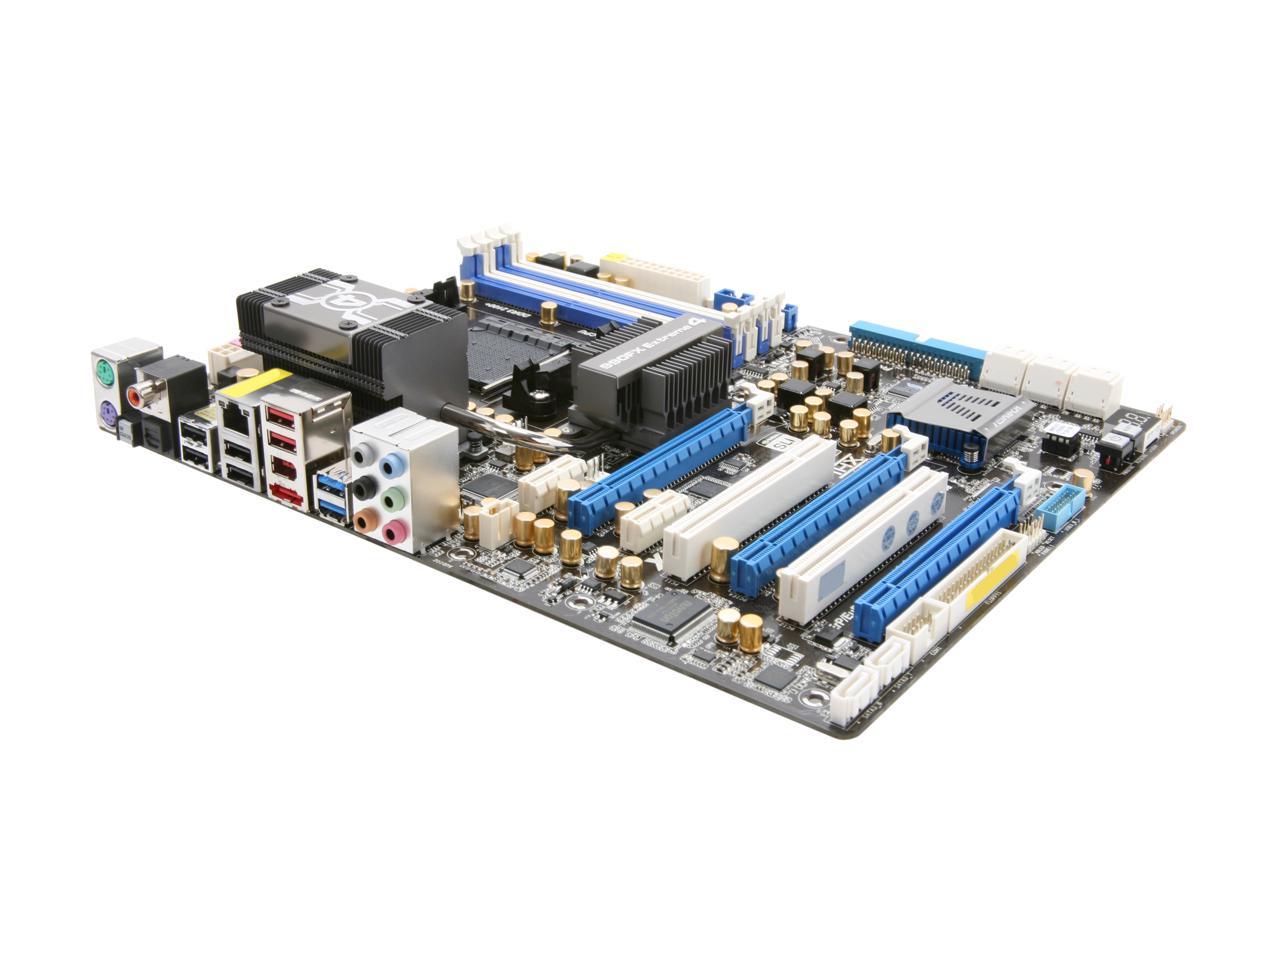 ASRock 990FX Extreme4 AM3+ AMD 990FX + SB950 SATA 6Gb/s USB 3.0 ATX AMD Motherboard